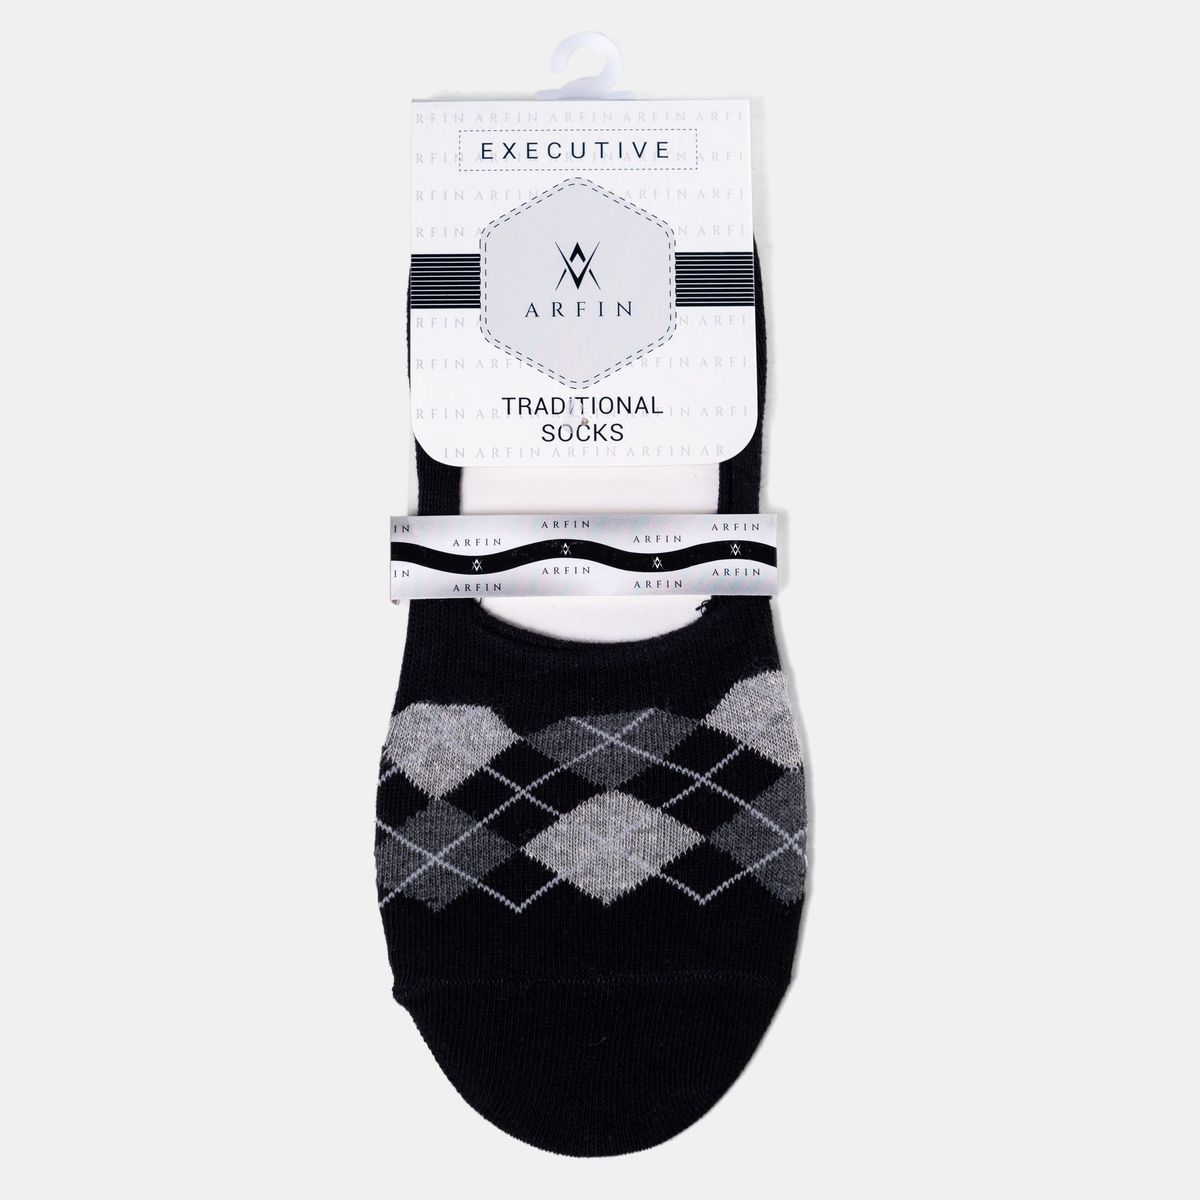  BLACK Mixed Loafer Socks Image